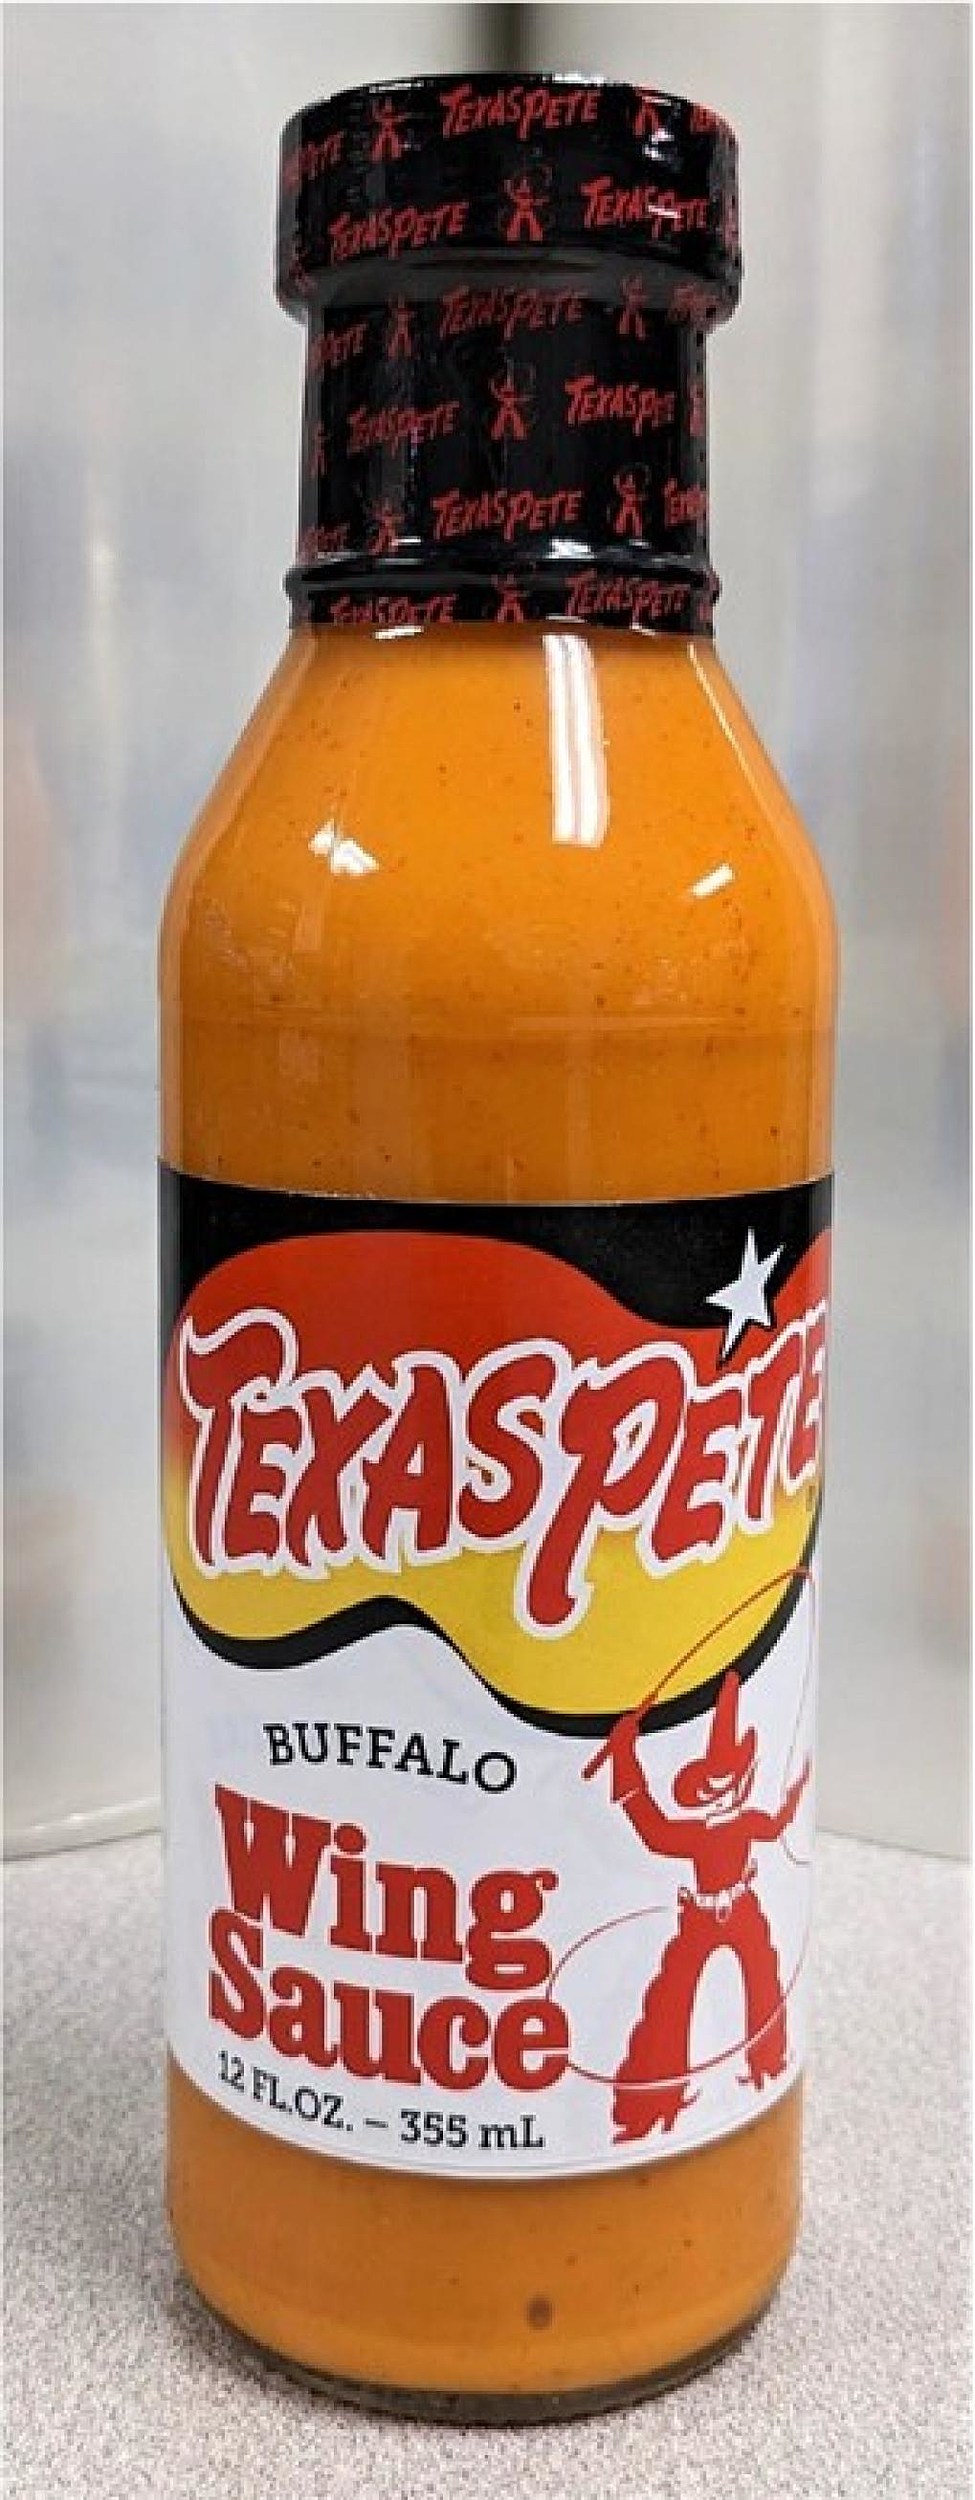 Louisiana Hot Sauce – Chile Flojo